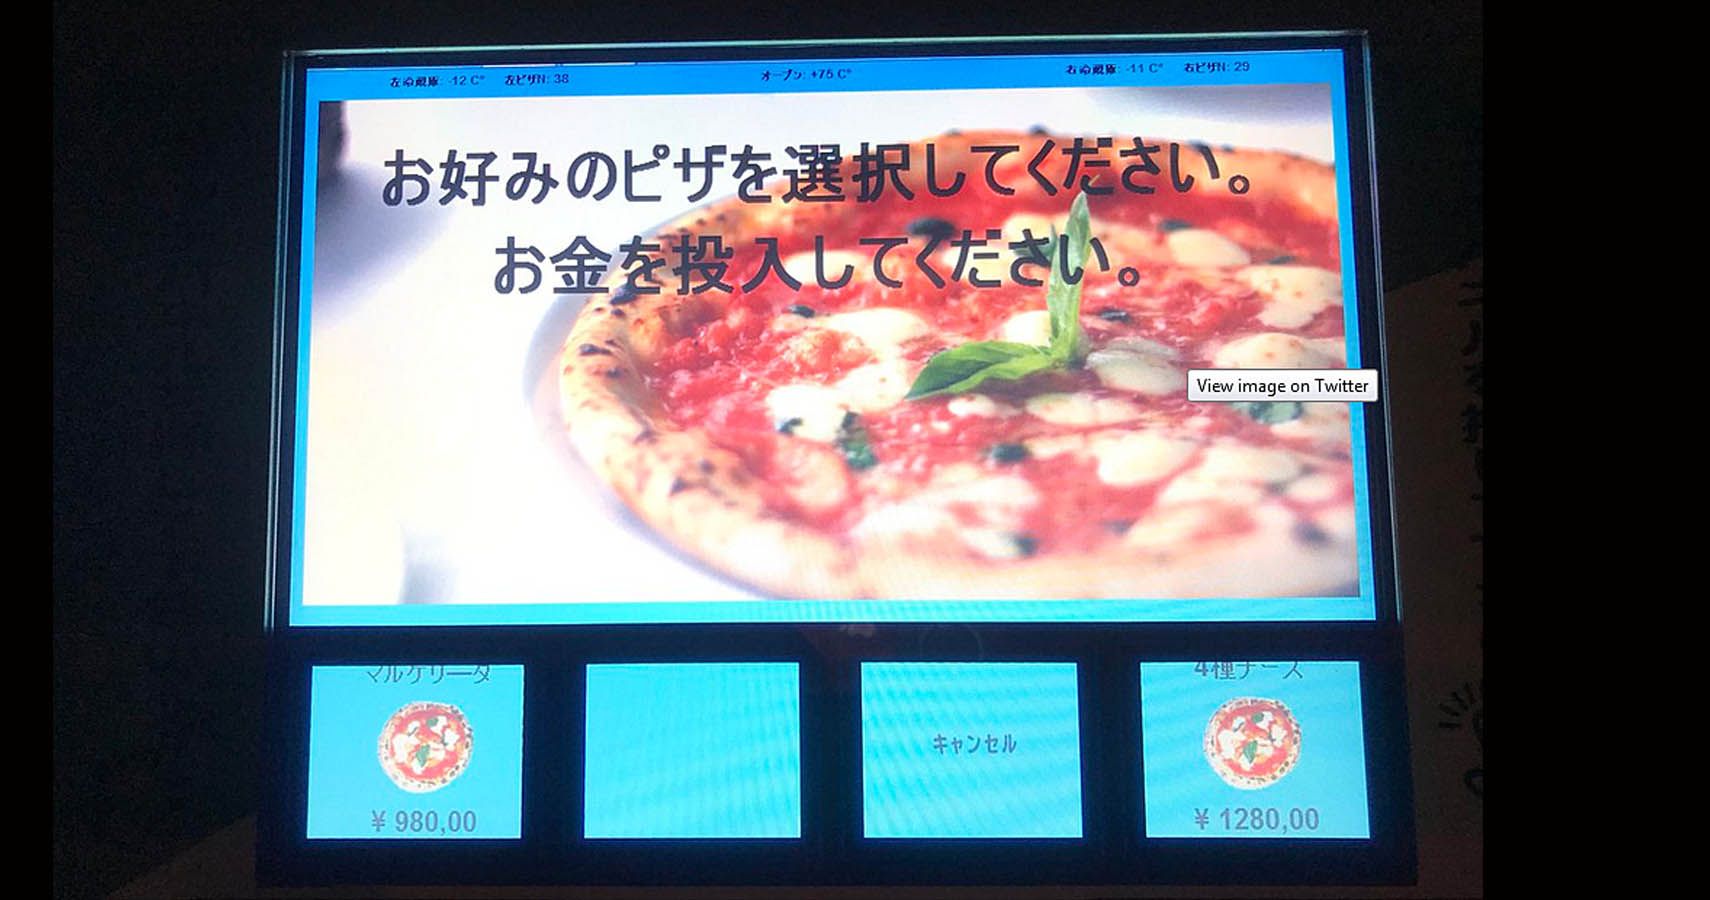 A primeira maquina de venda automatica de pizza de massa